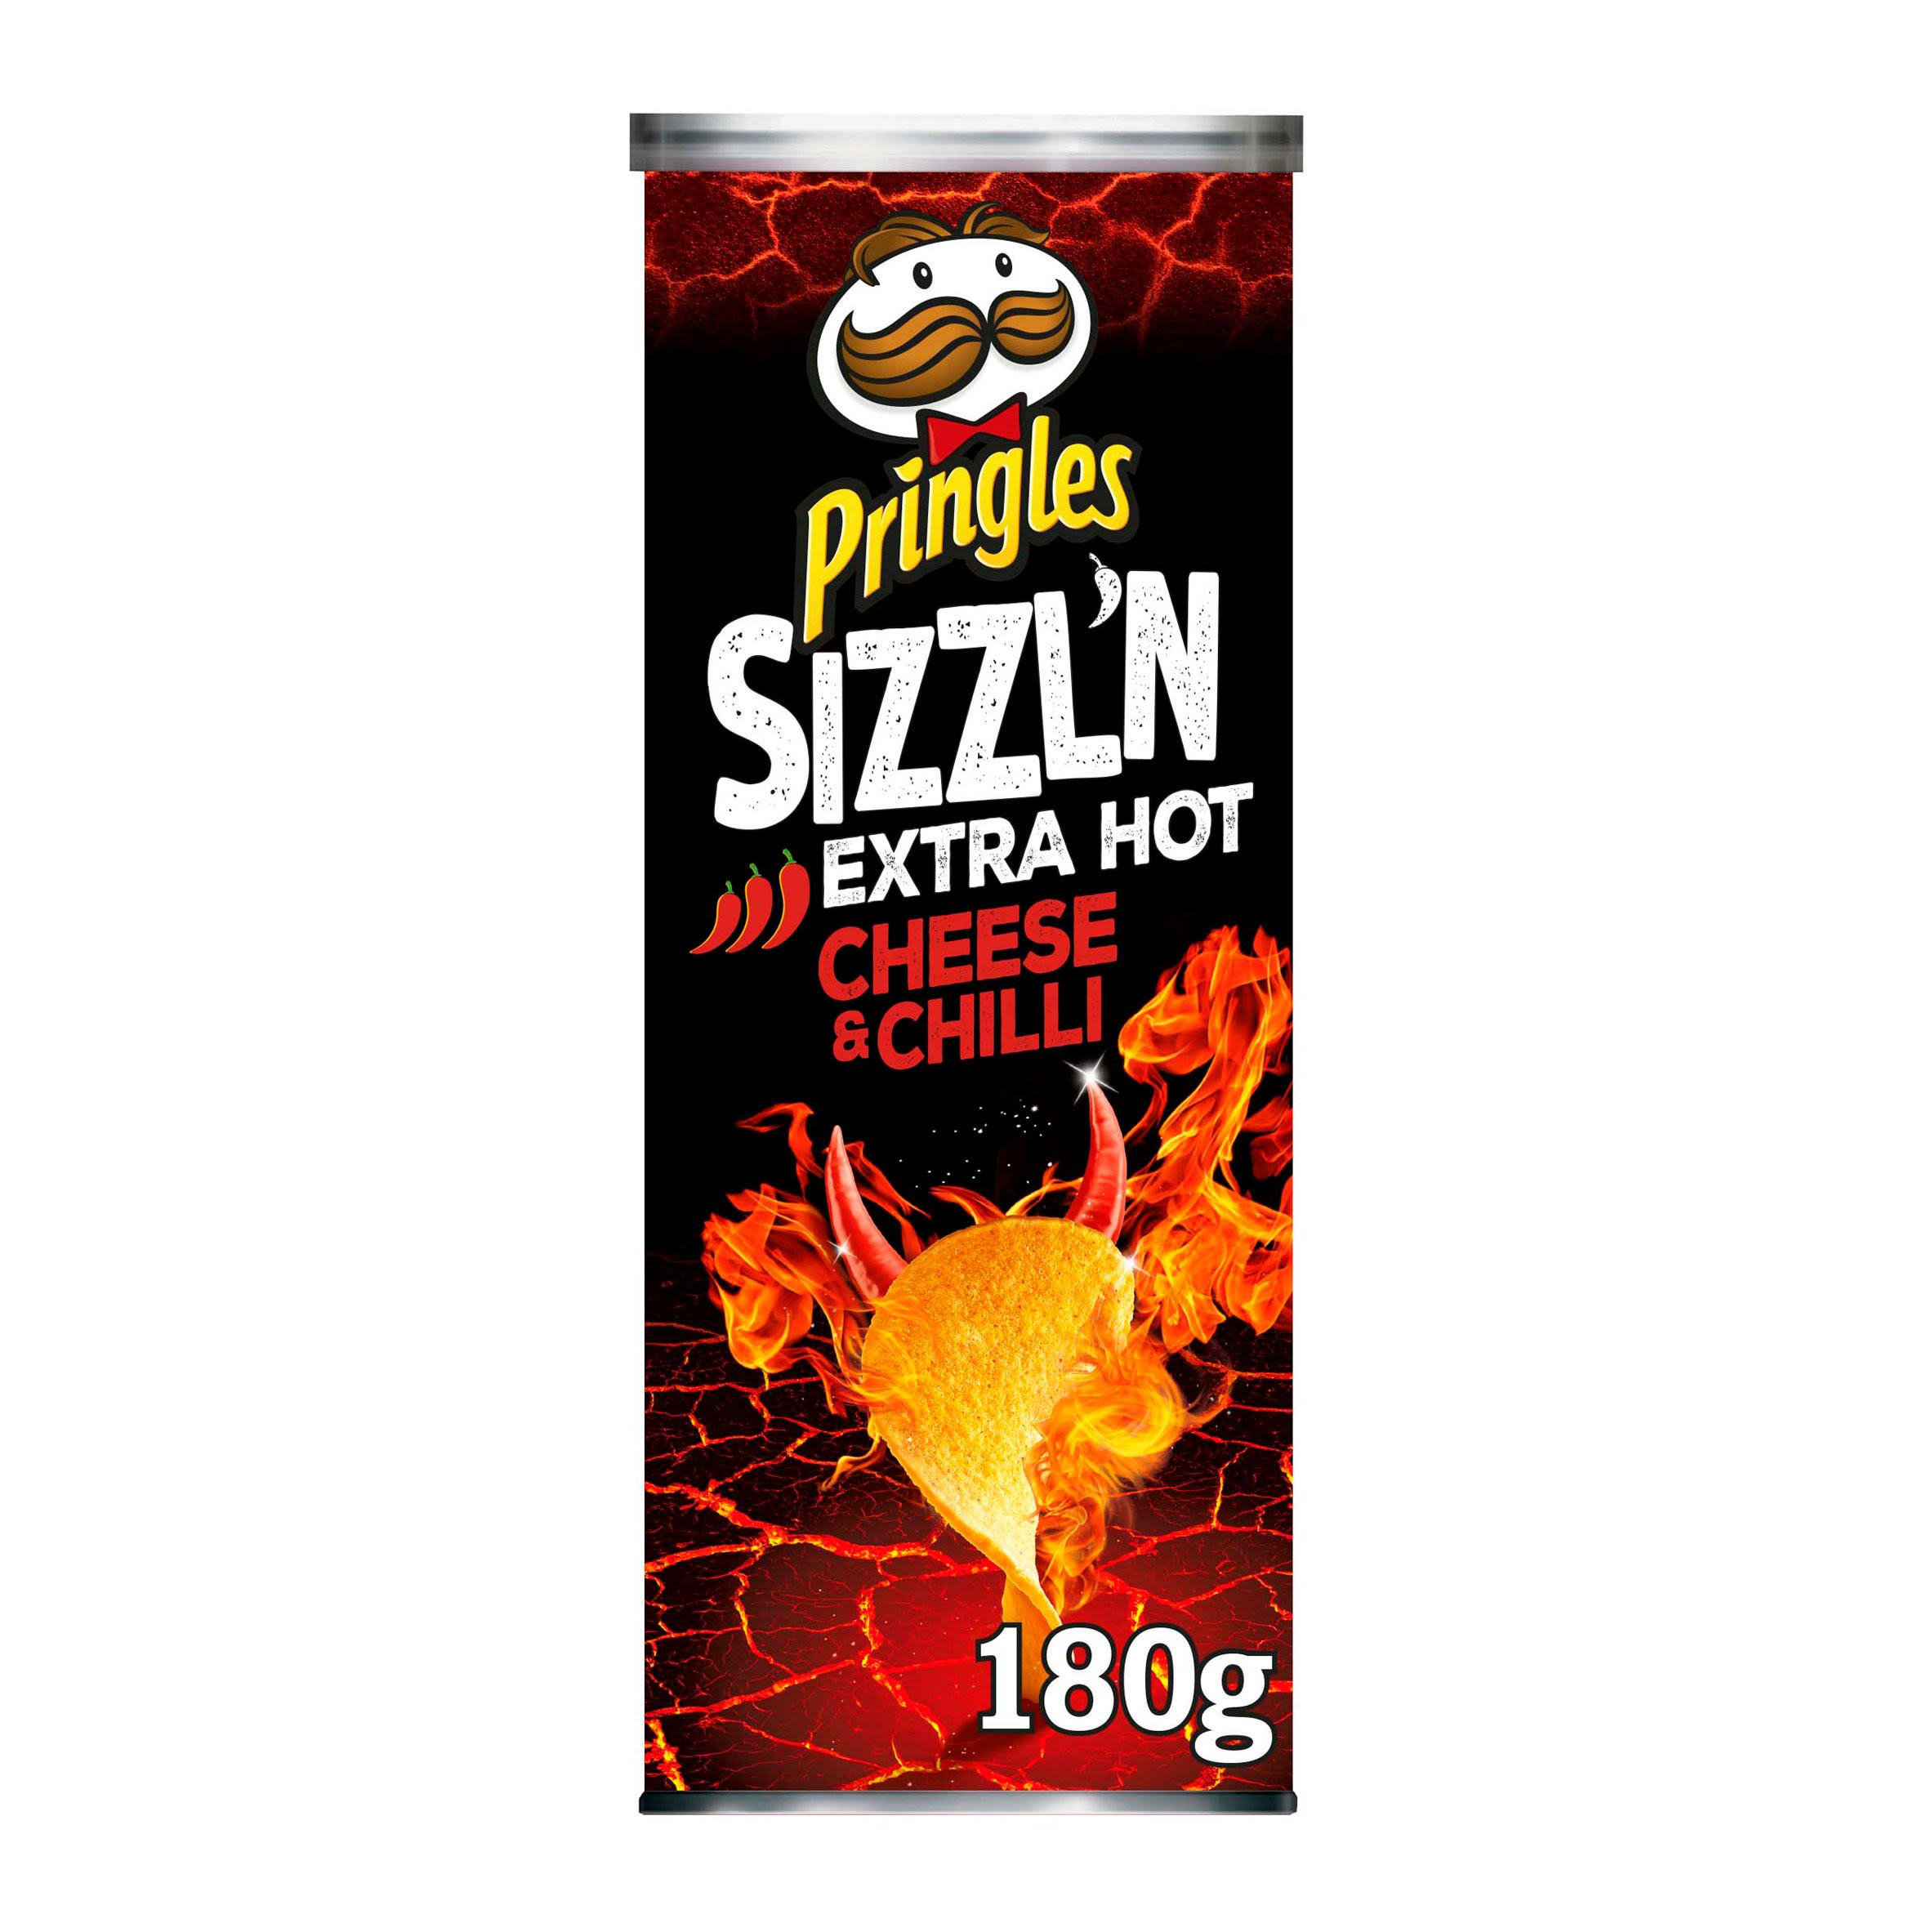 Pringles Sizzl'n Extra Hot Cheese & Chilli Crisps 180g